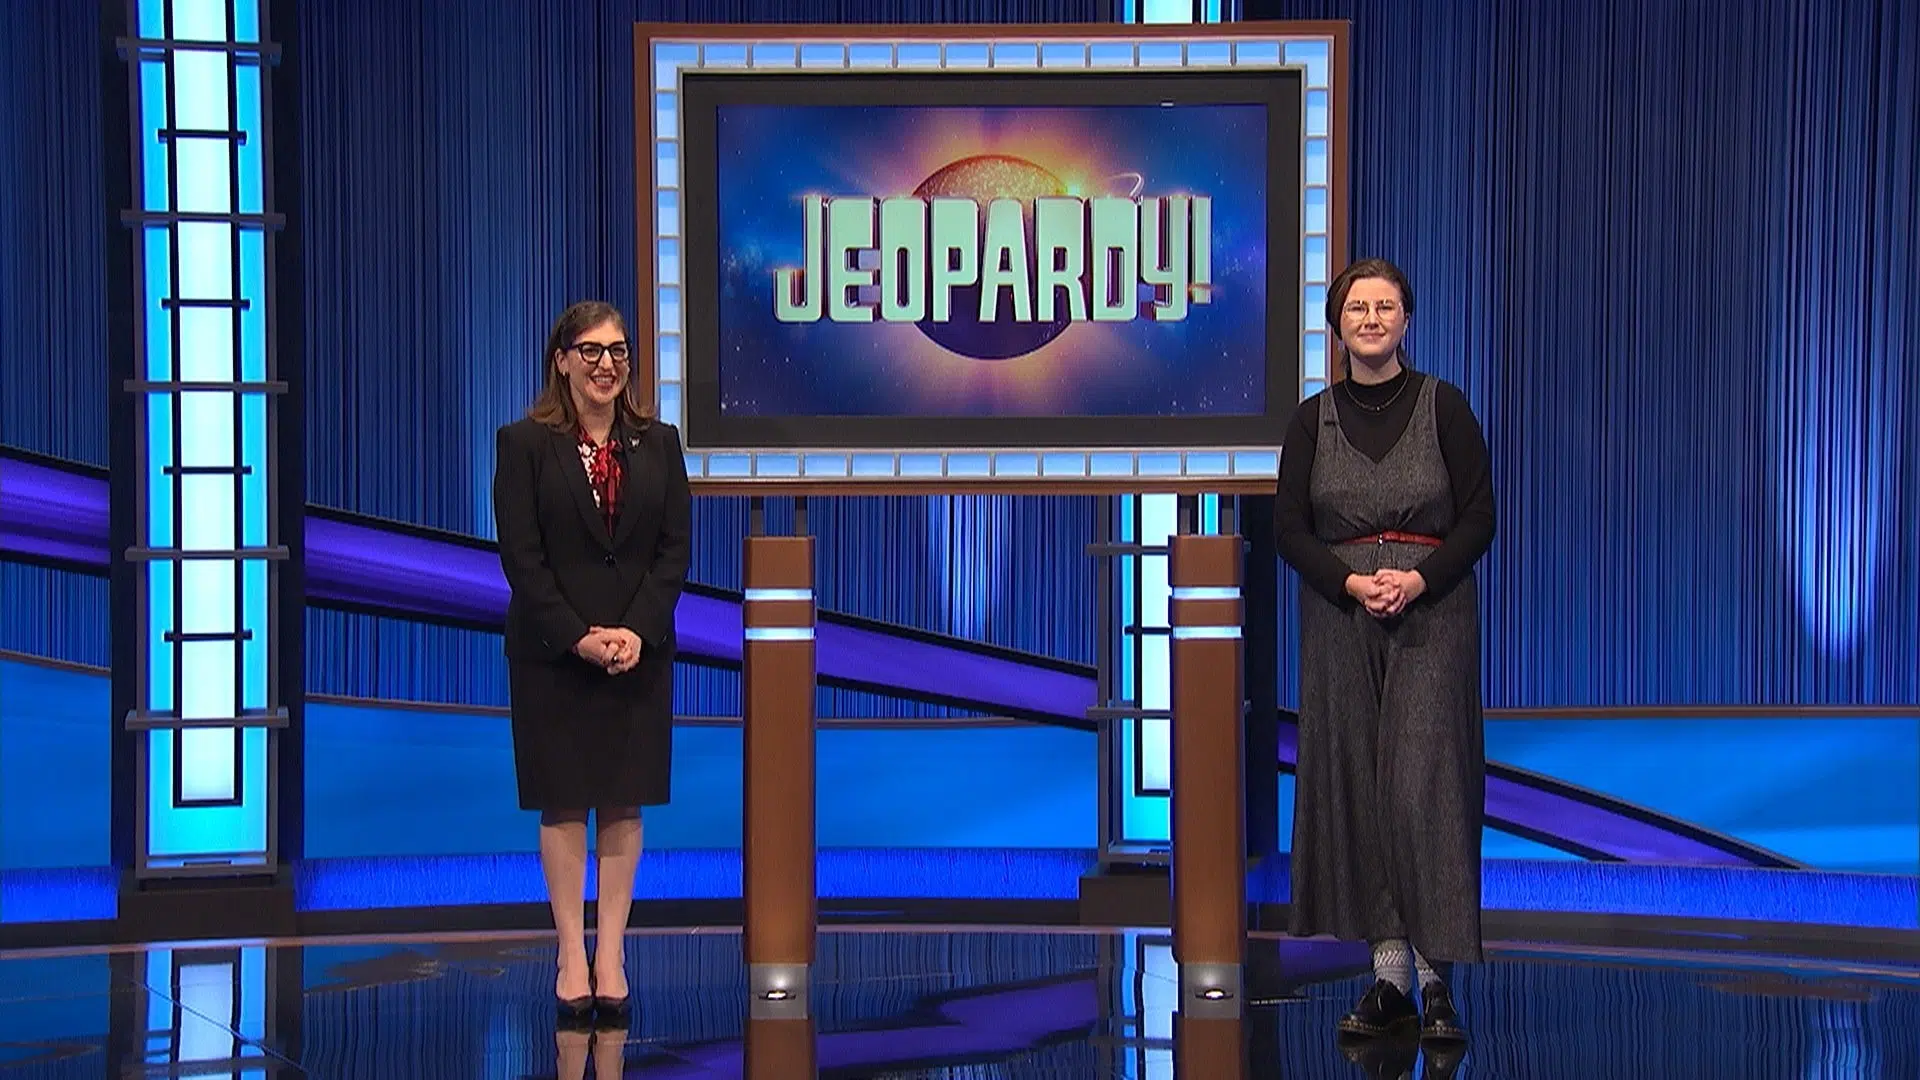 Third Jeopardy! win for Nova Scotia’s Mattea Roach